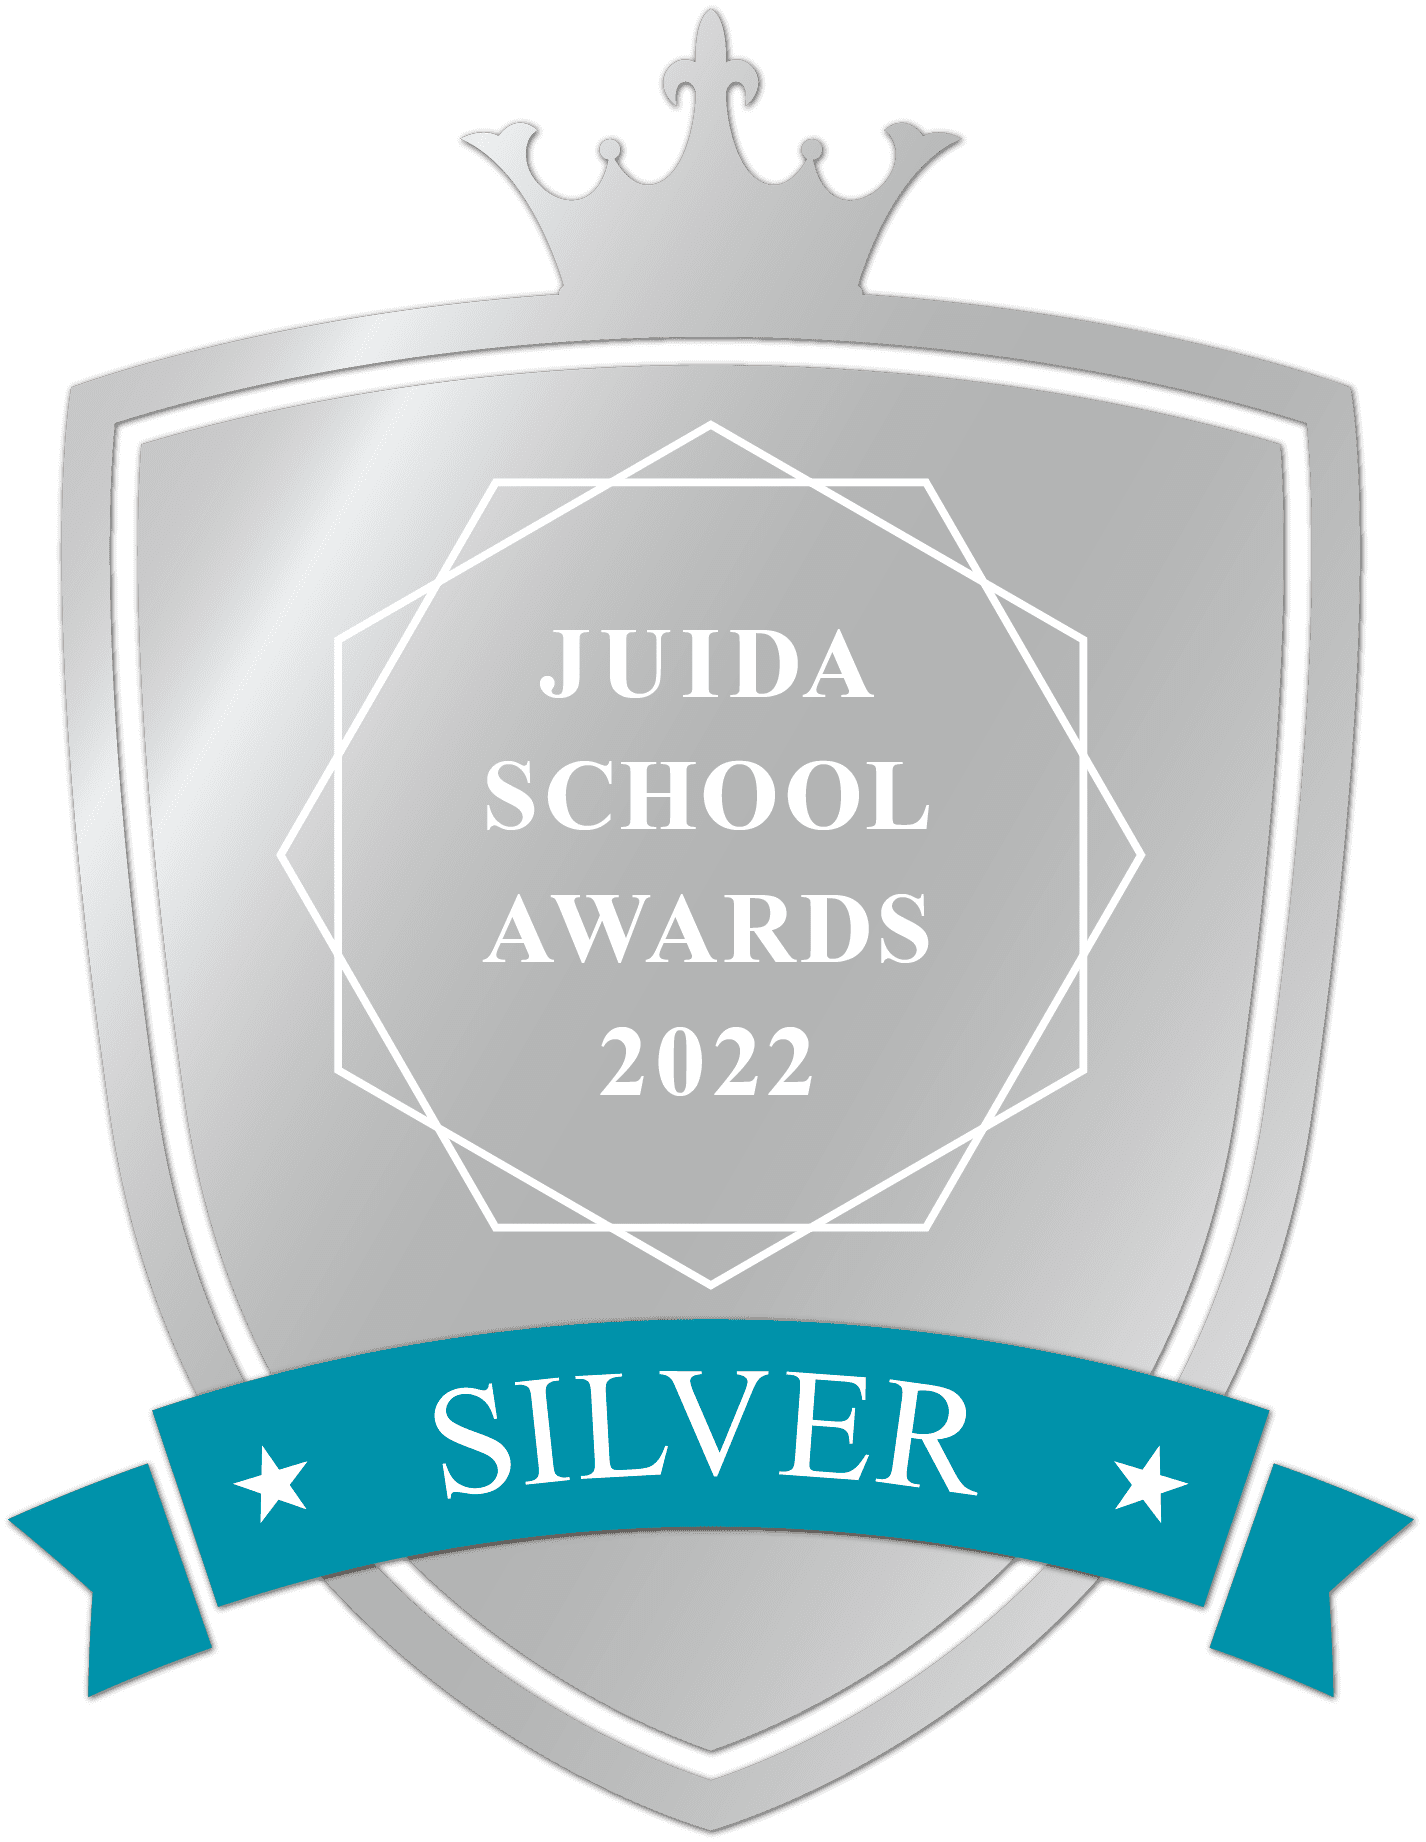 JUIDA SCHOOL AWARDS 2022 Silver